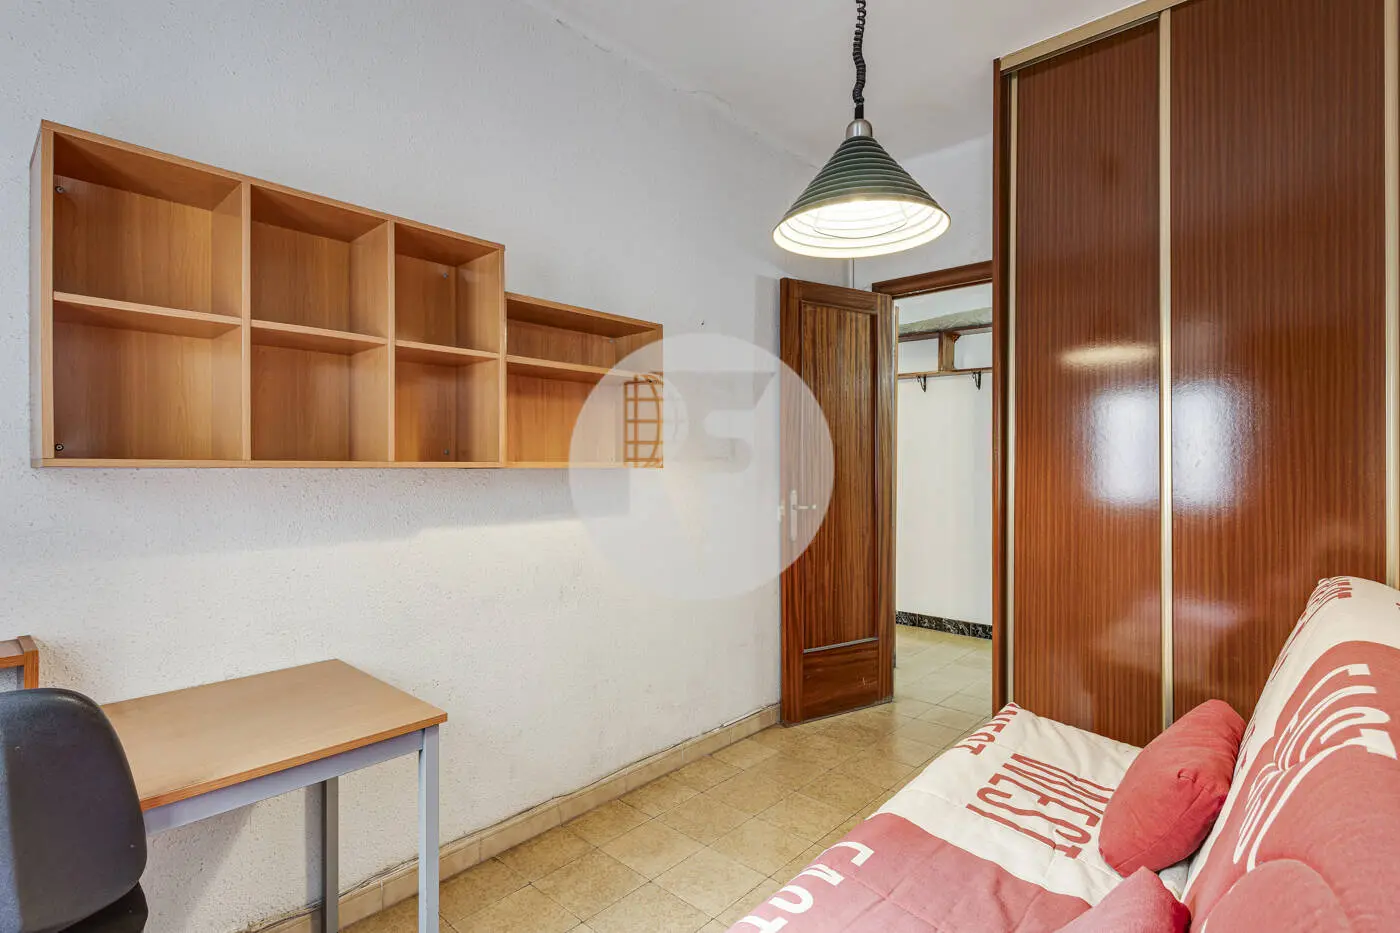 3-bedroom apartment located in the Nova Esquerra de l'Eixample neighborhood of Barcelona. 21